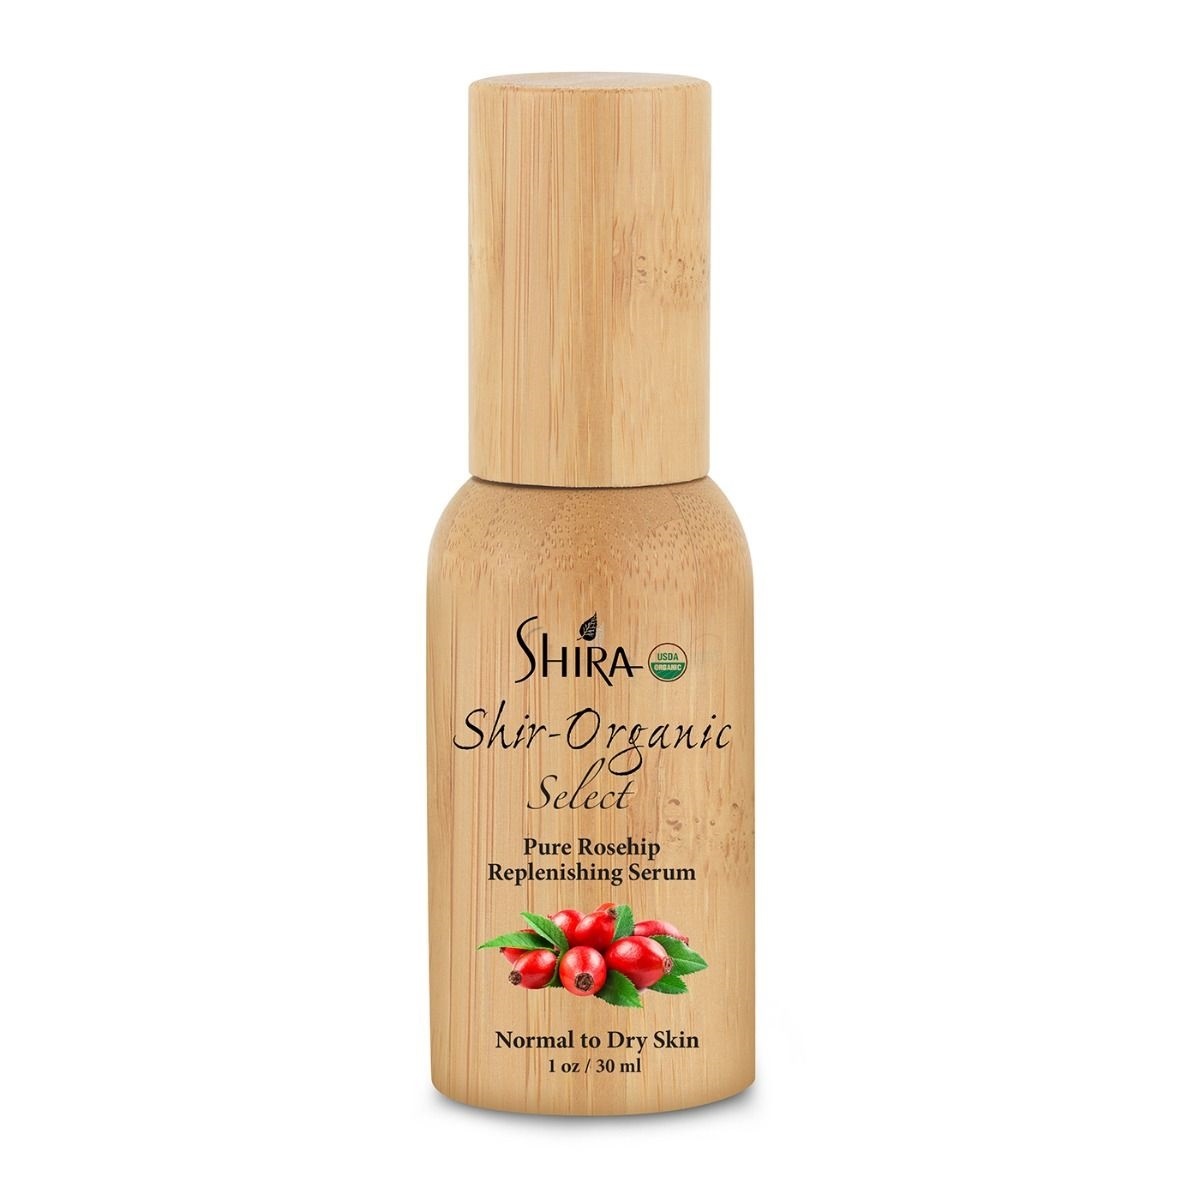 Shira Shir-Organic Select Pure Rosehip Replenishing Serum